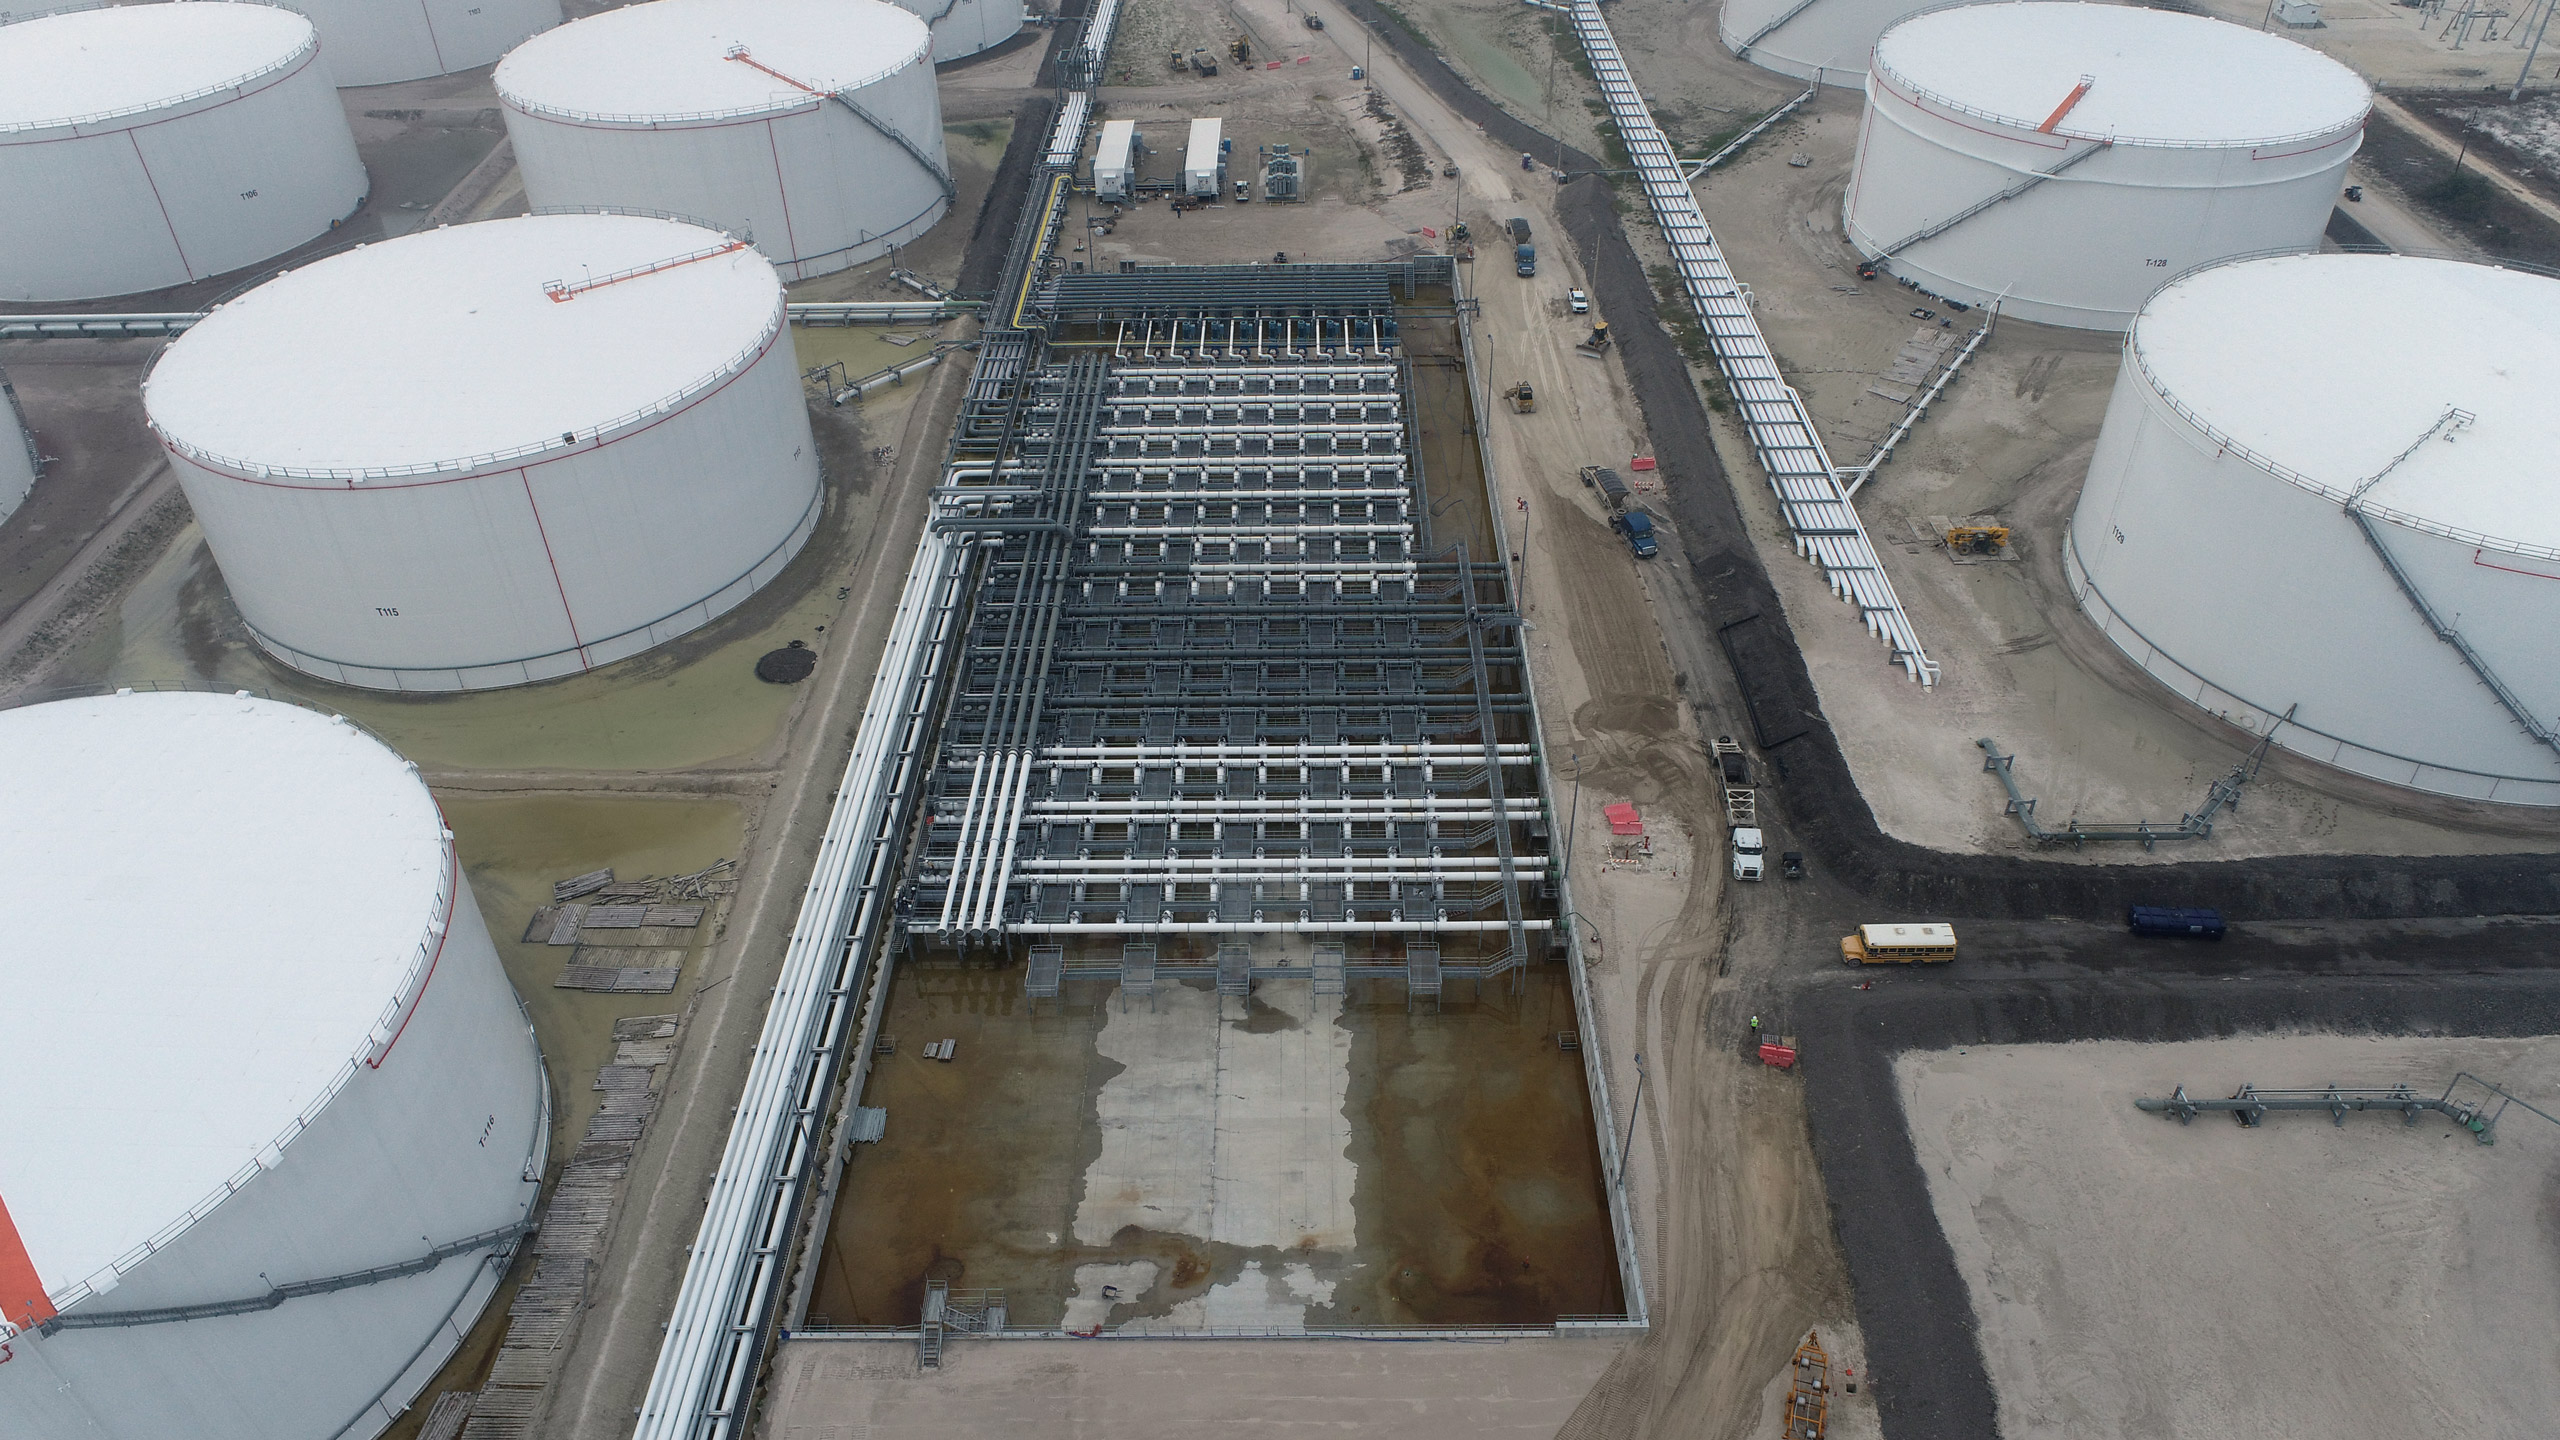 Enbridge’s Moda Ingleside Energy Center Crude Oil Storage and Export Terminal